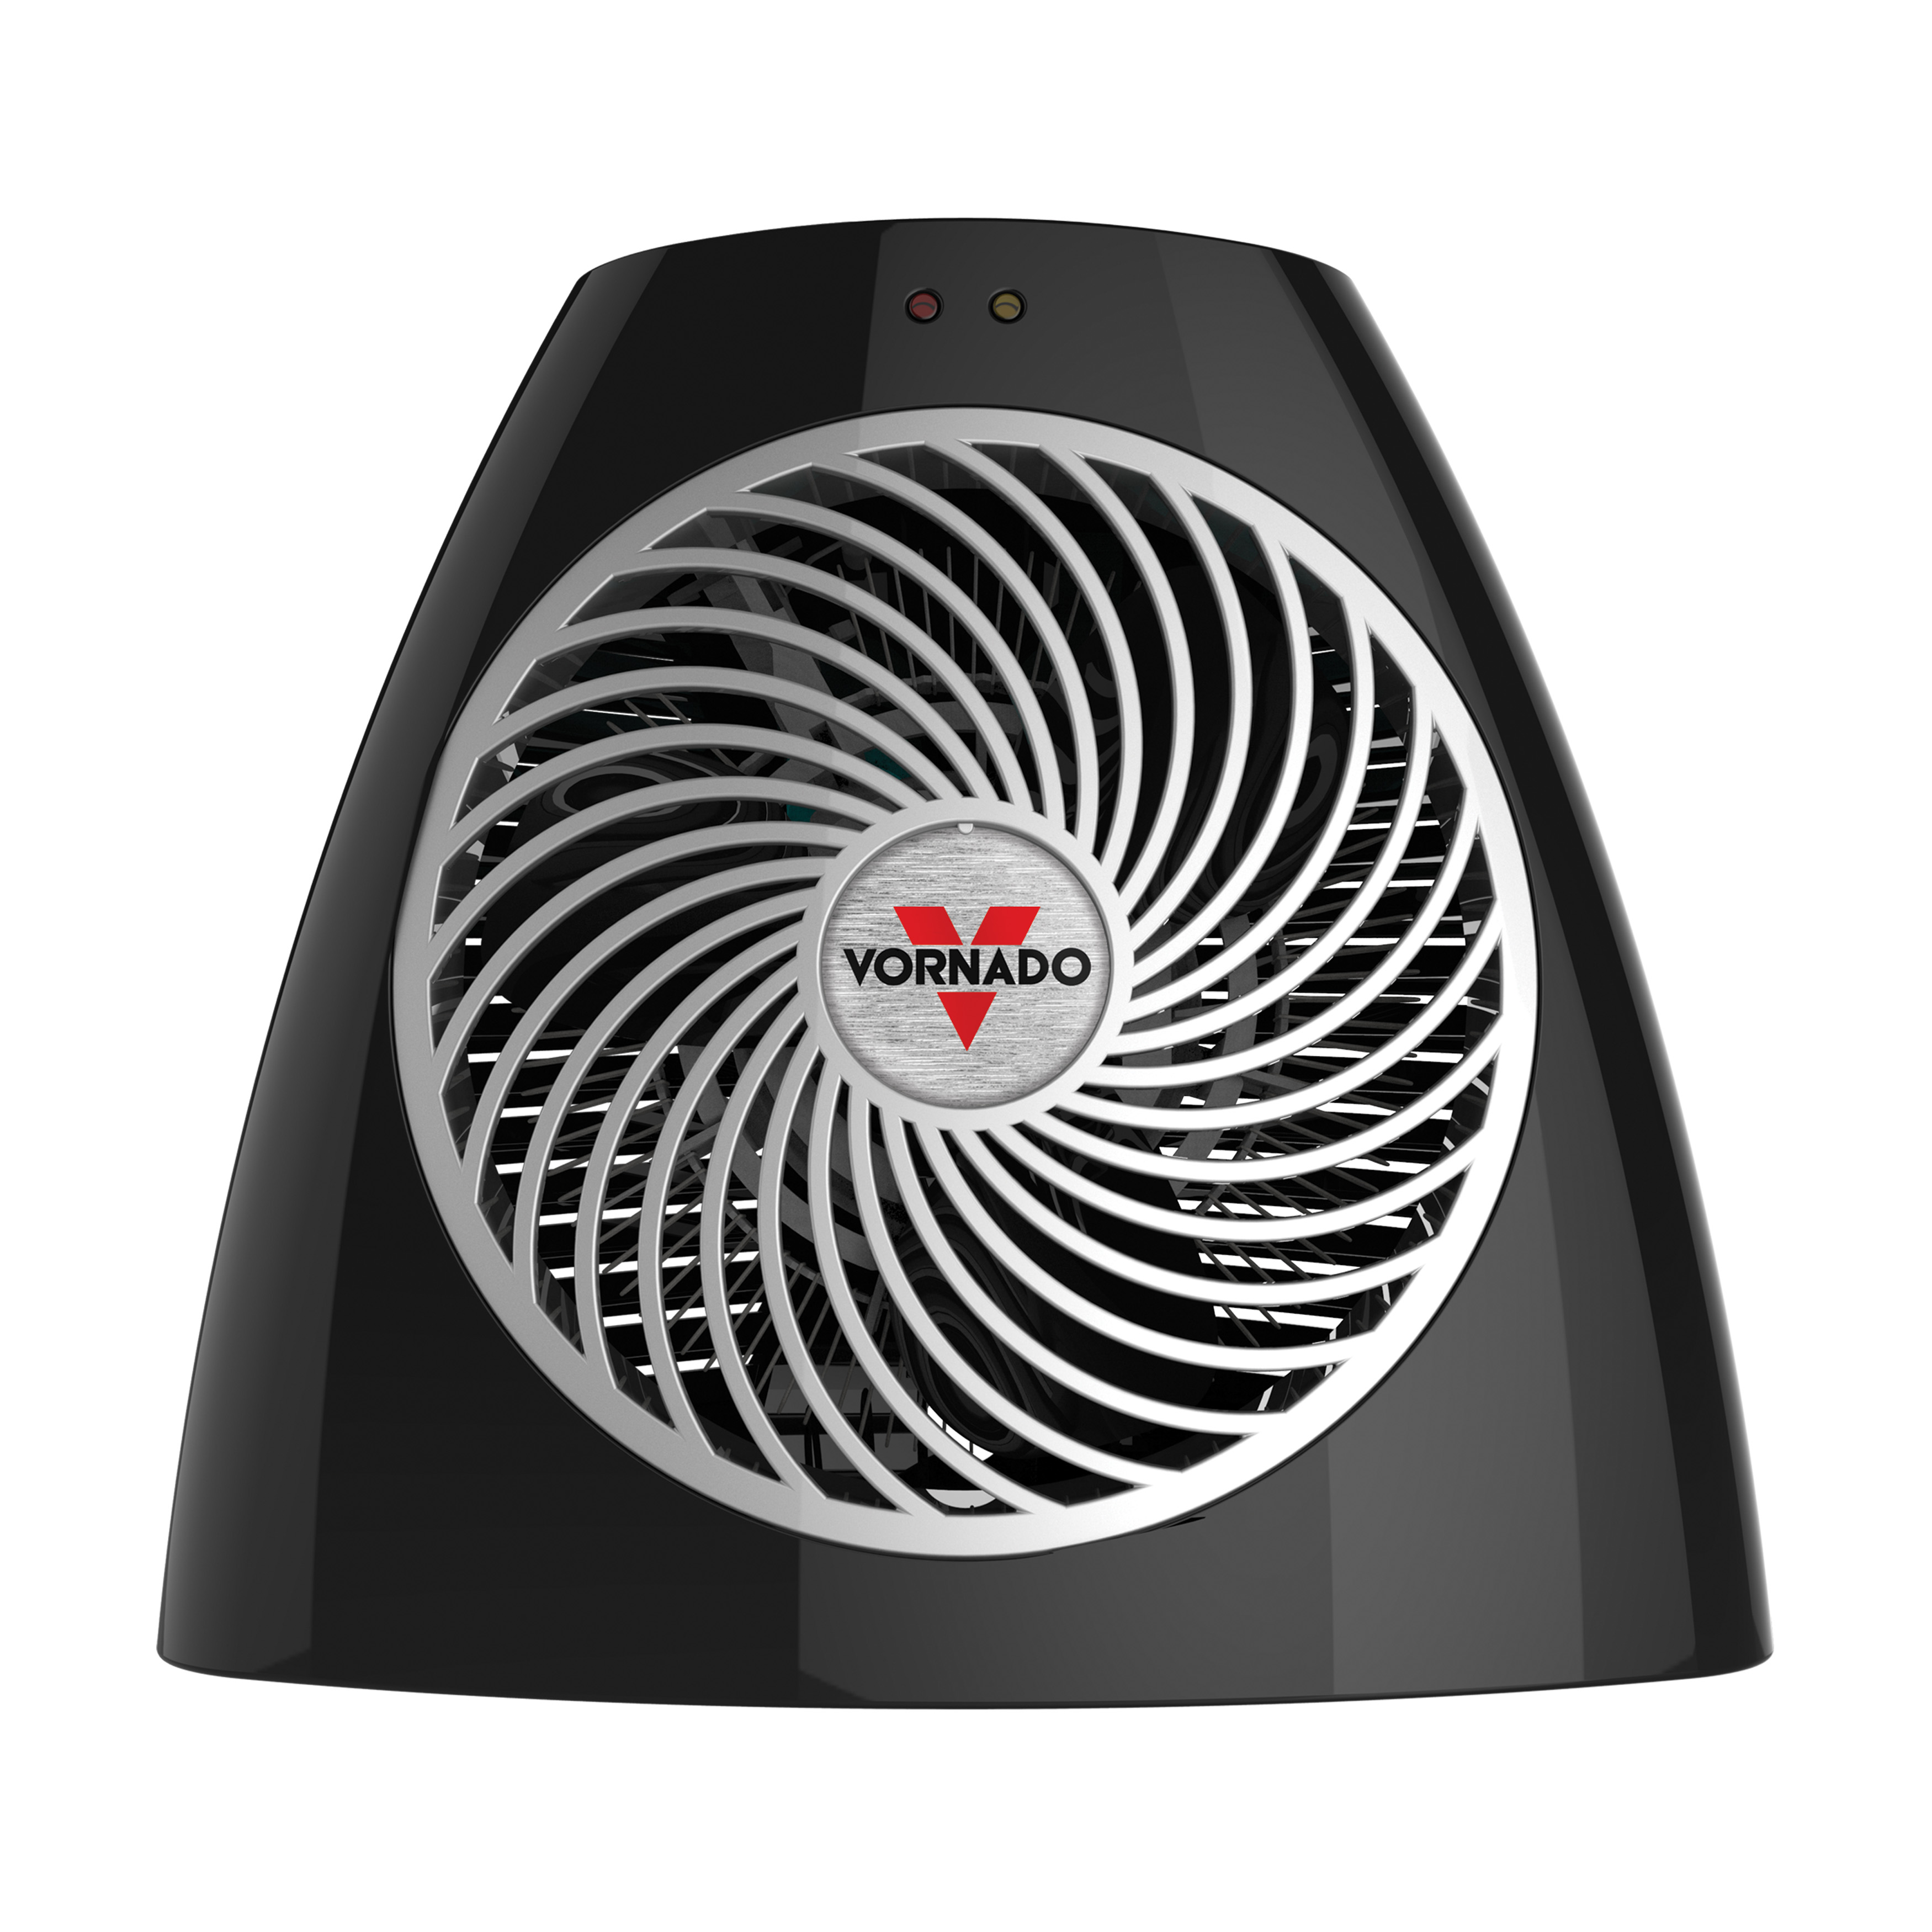 Vornado VH202 Personal Space Heater with Vortex Heat, Black (New) - image 2 of 5